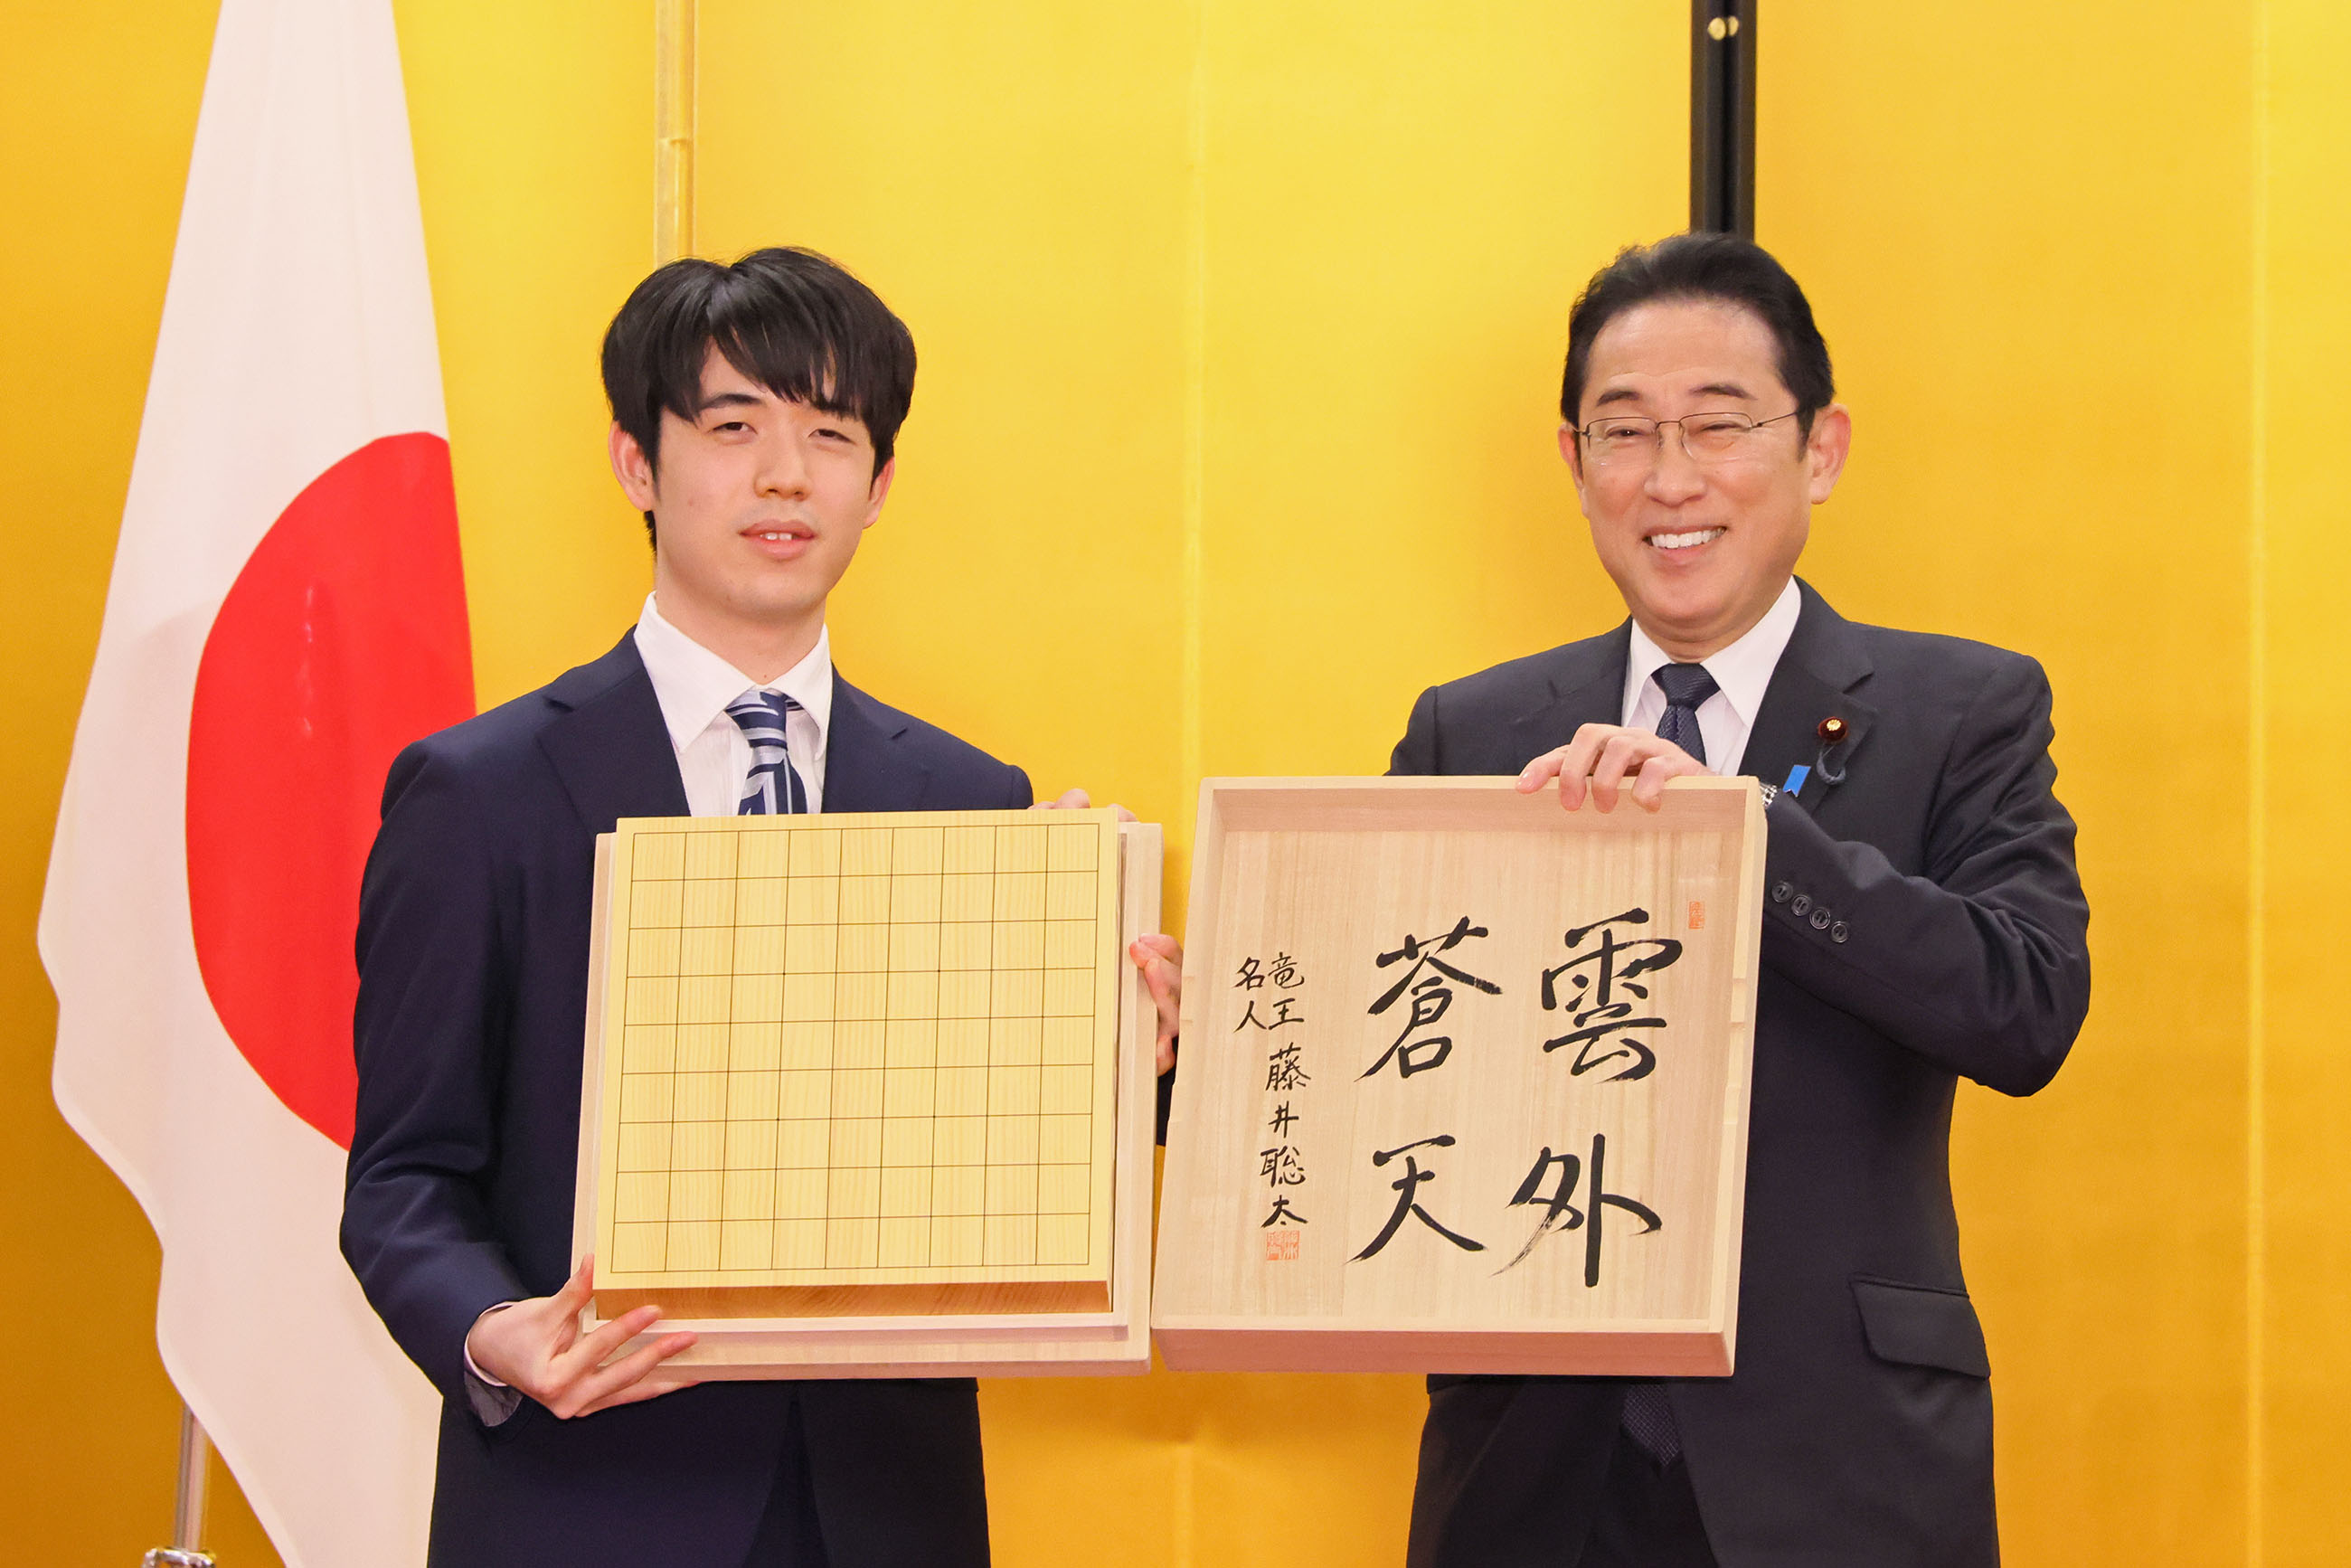 Prime Minister Kishida receiving a gift in return (2)